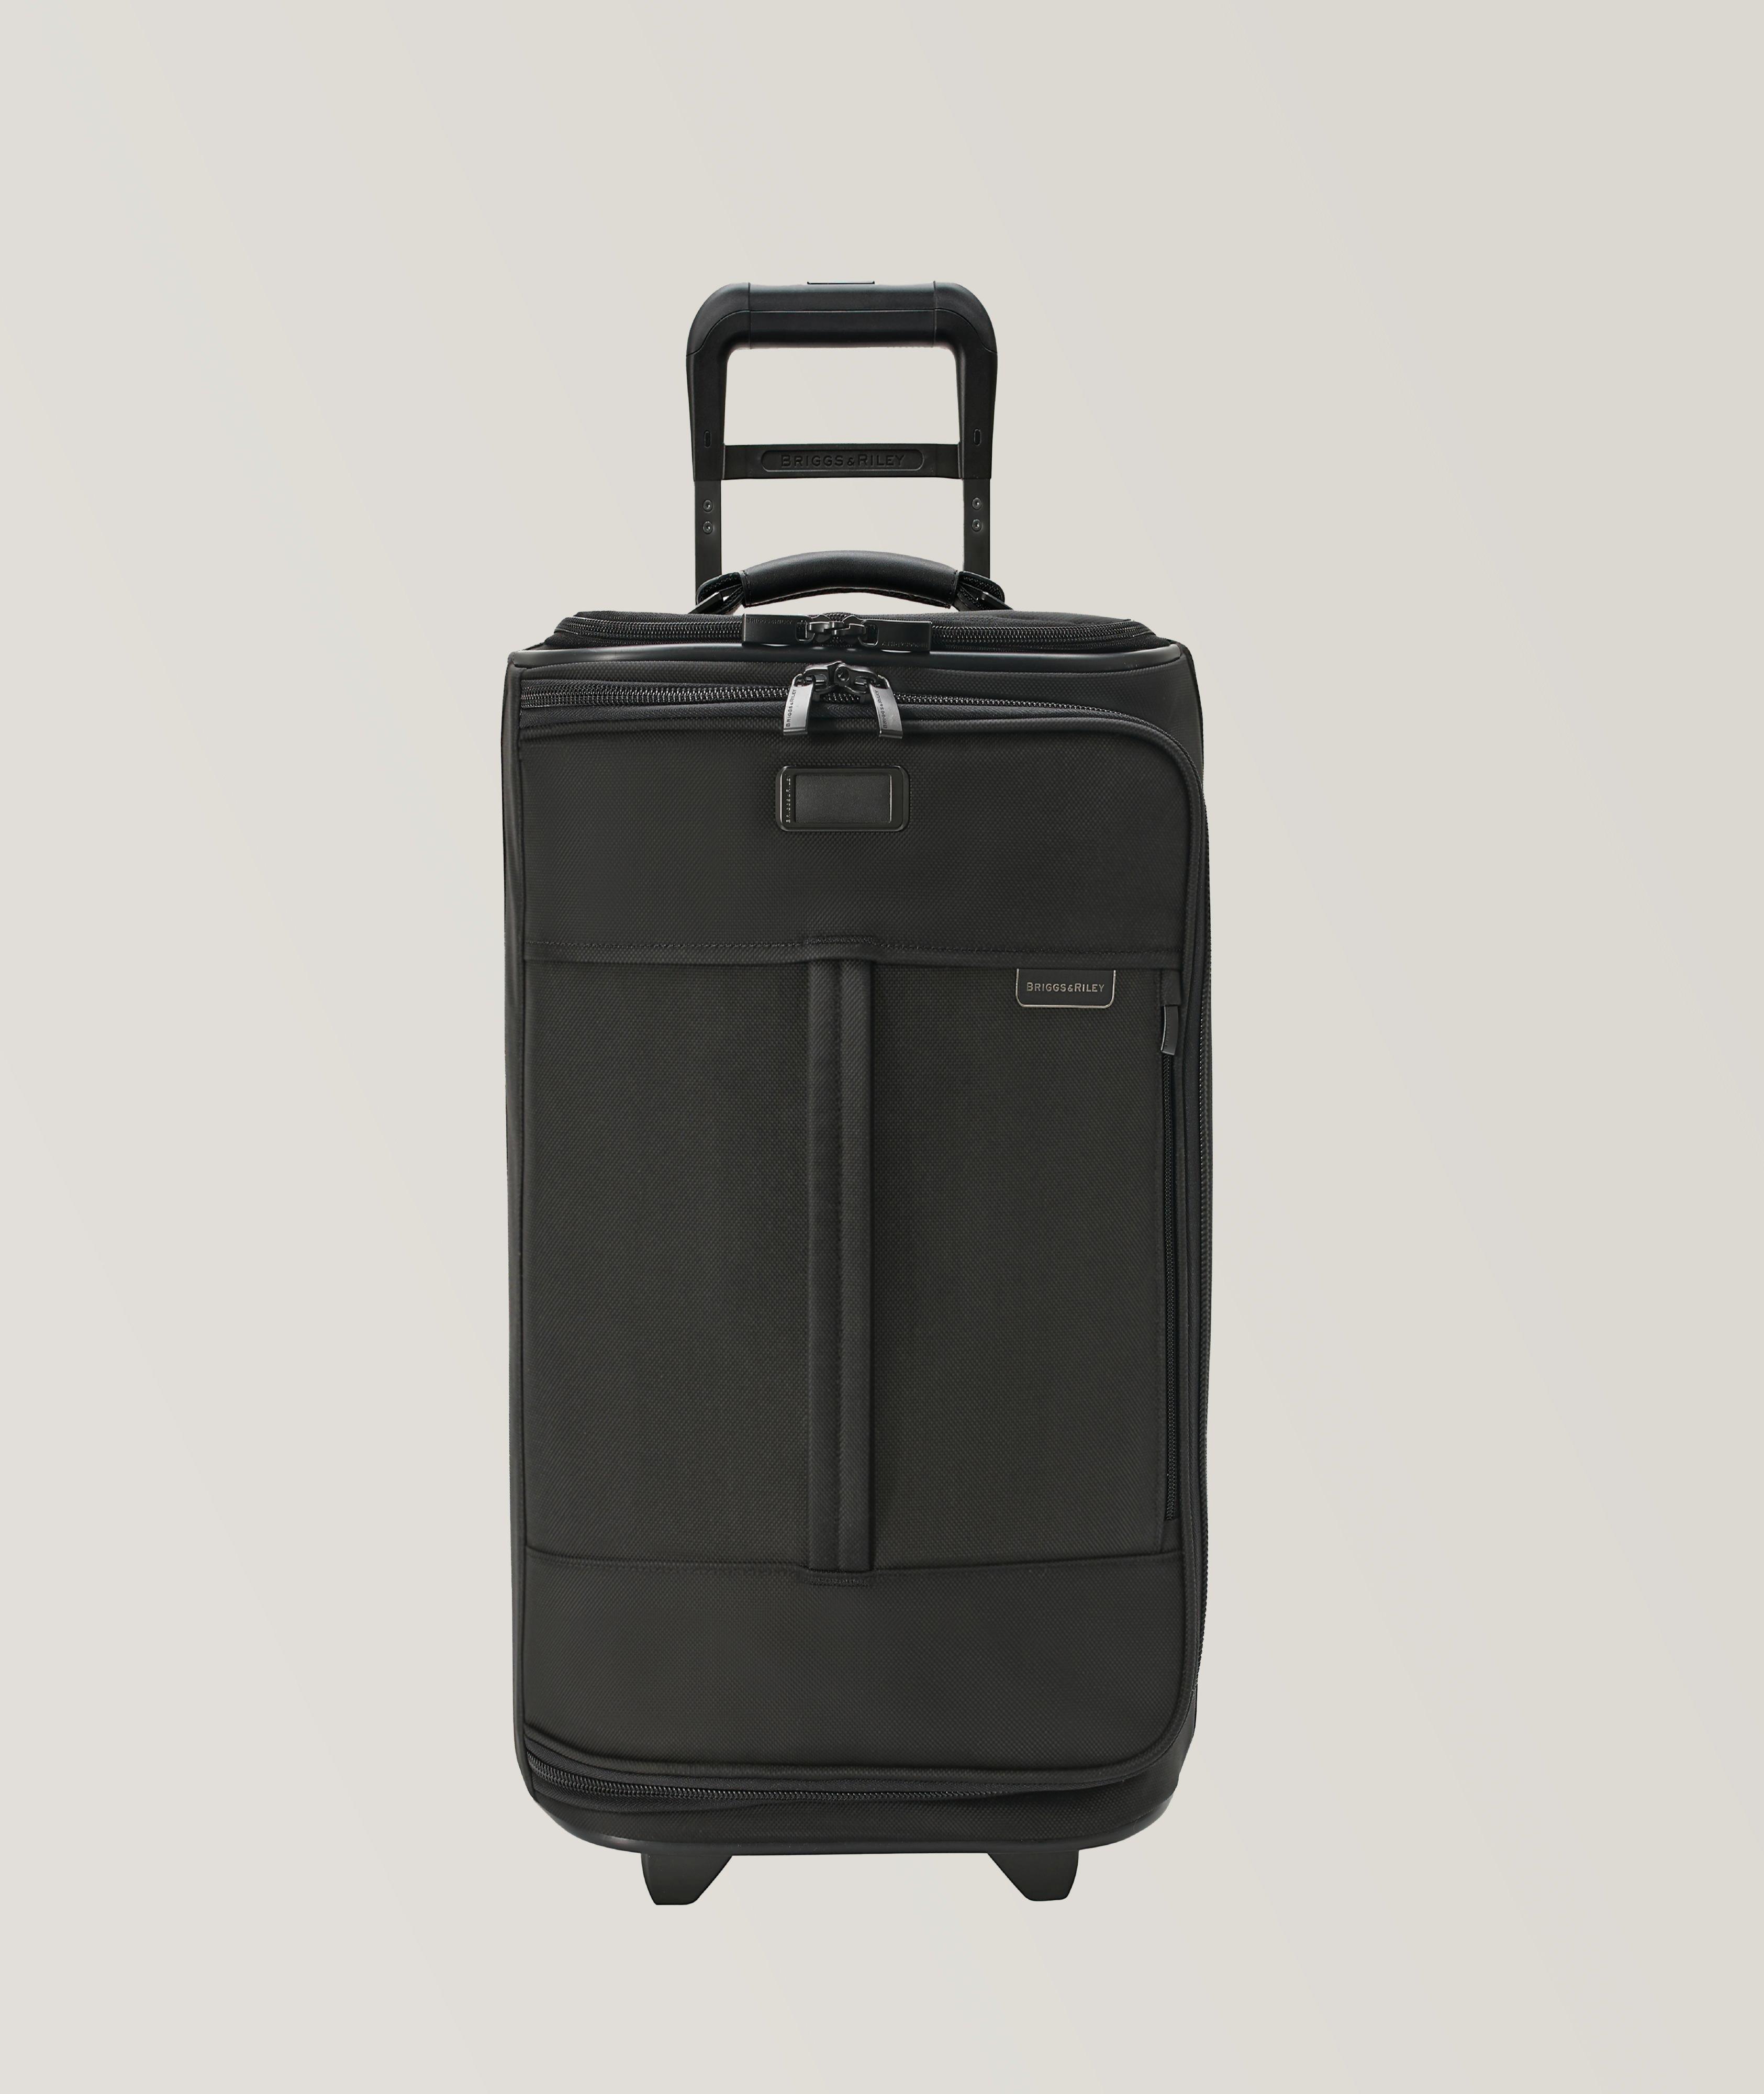 Global 2-Wheel Carry-On Duffle Bag image 0